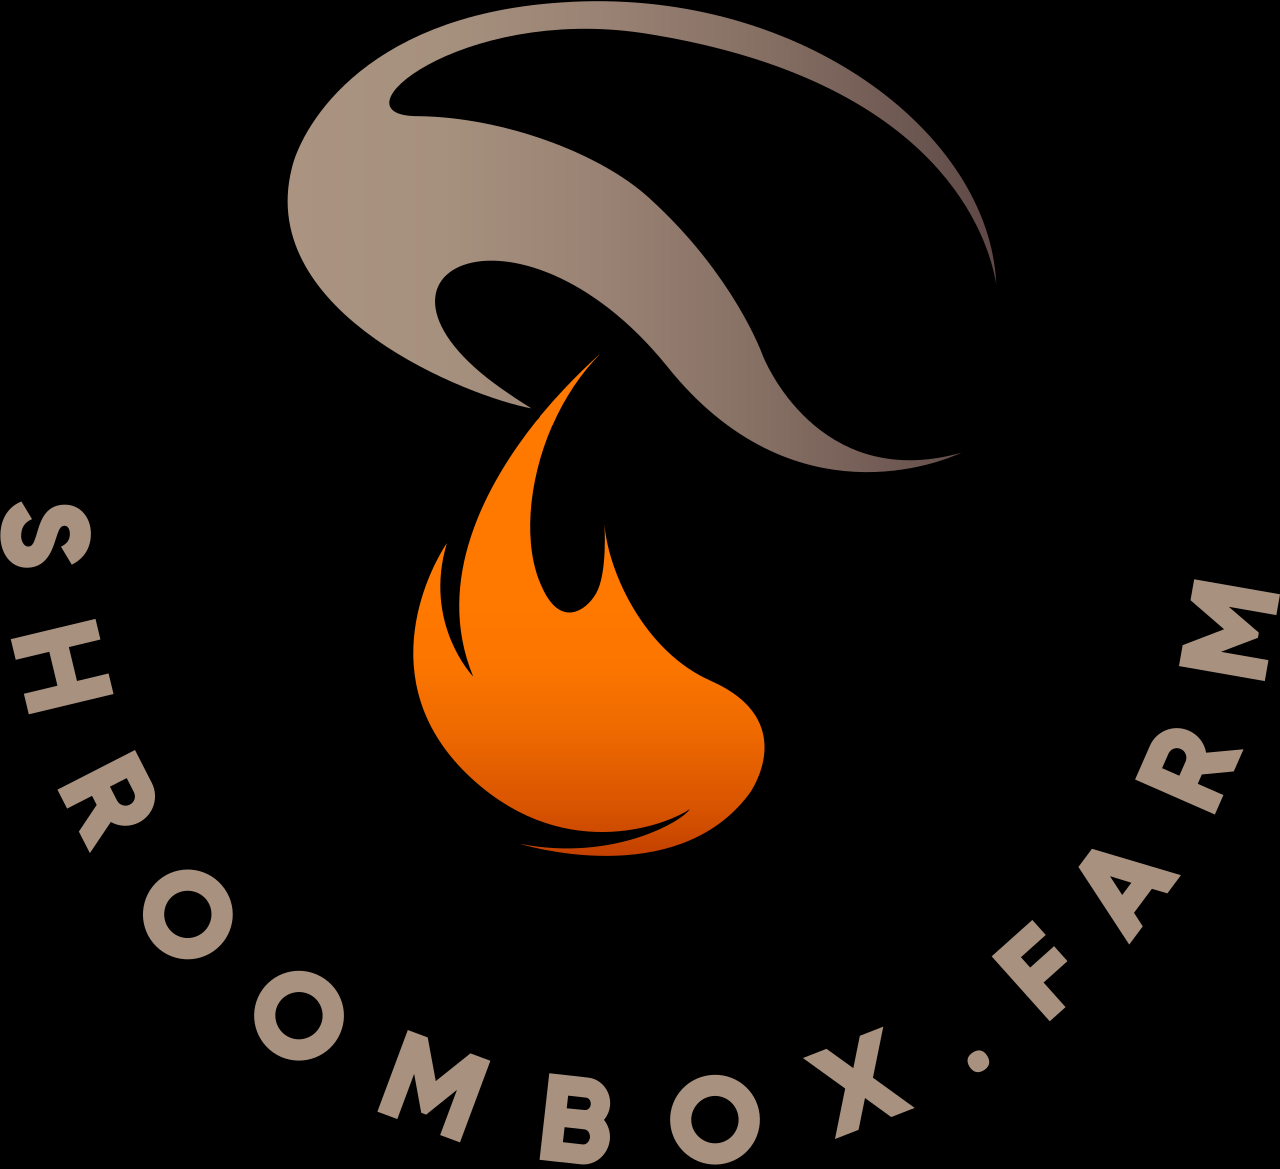 ShroomBox.farm's logo